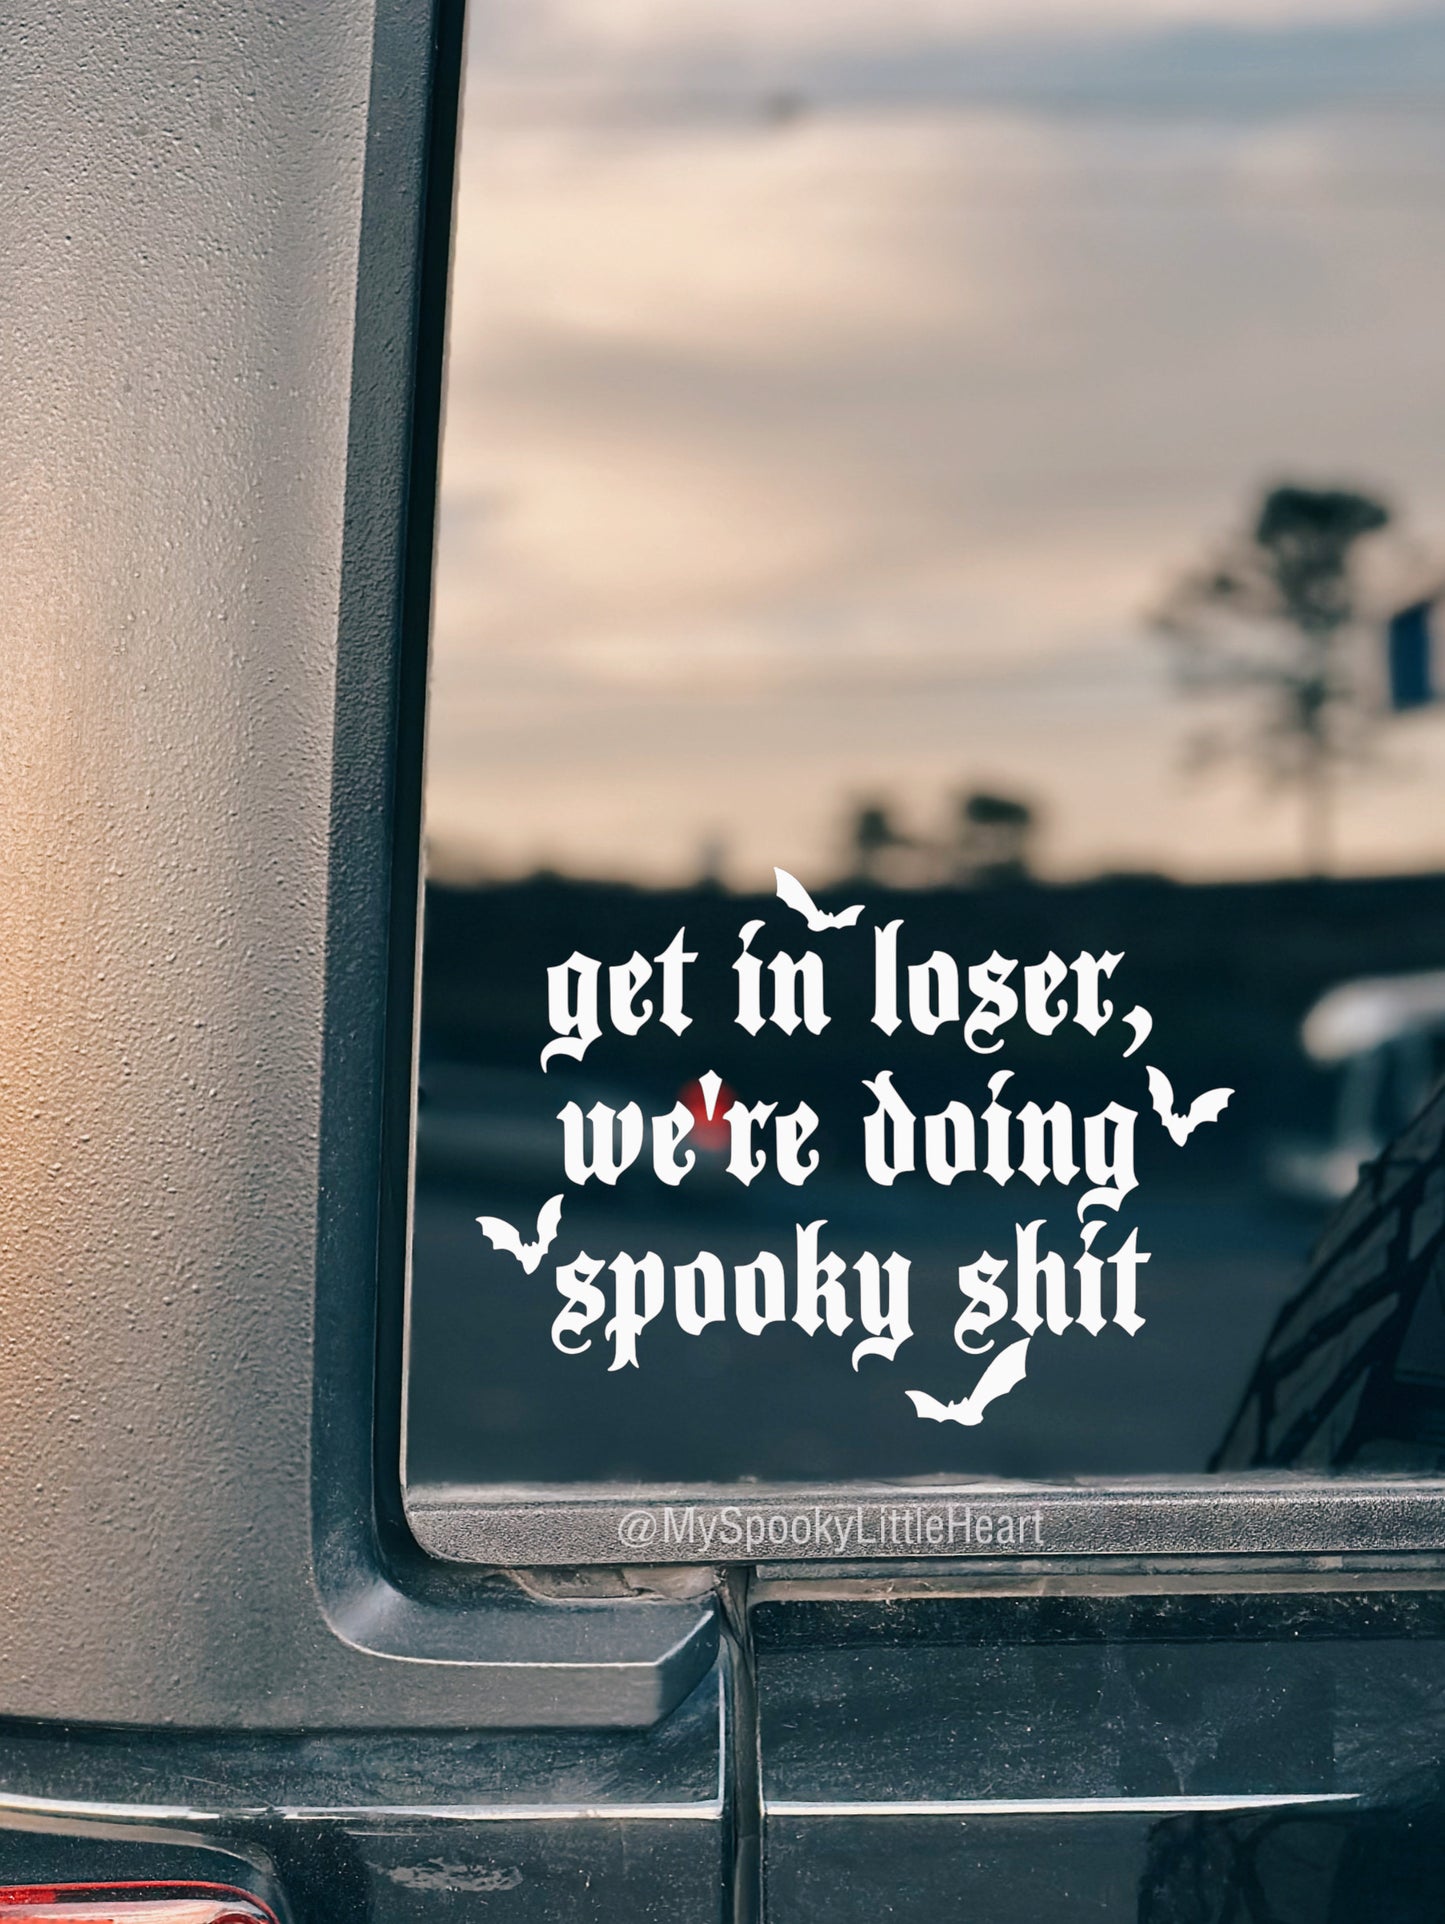 Get in Loser, We’re Doing Spooky Shit Vinyl Decal